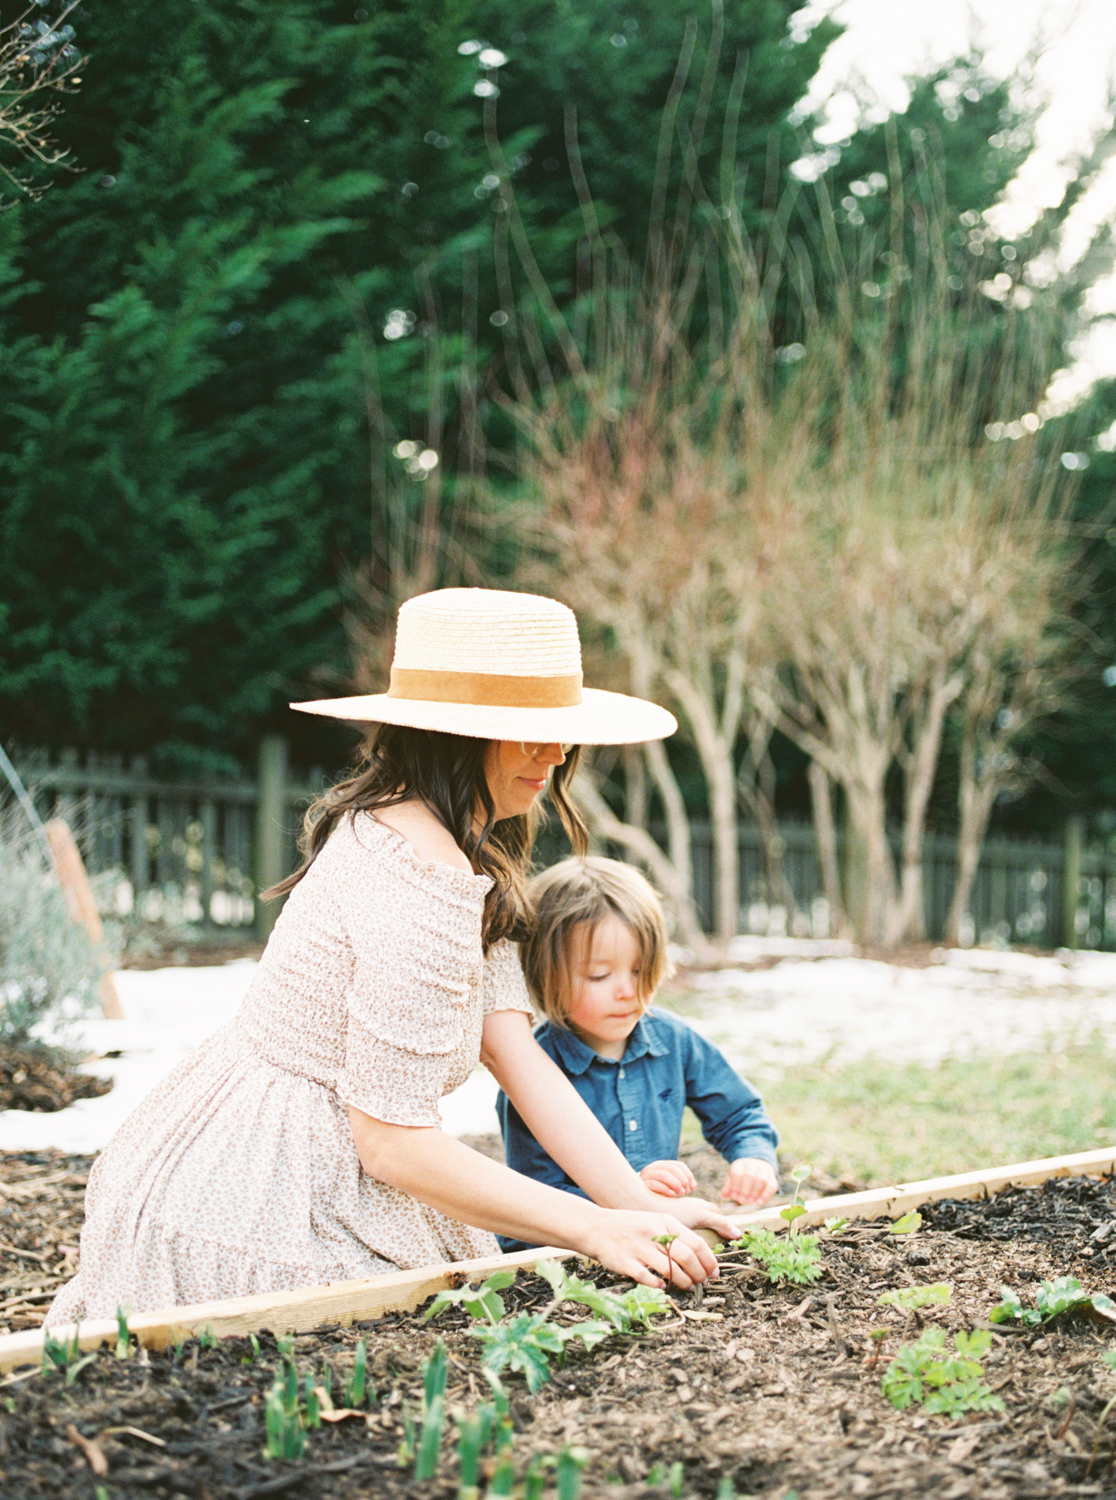 asheville-florist-gardening-in-her-yard-with-her-son